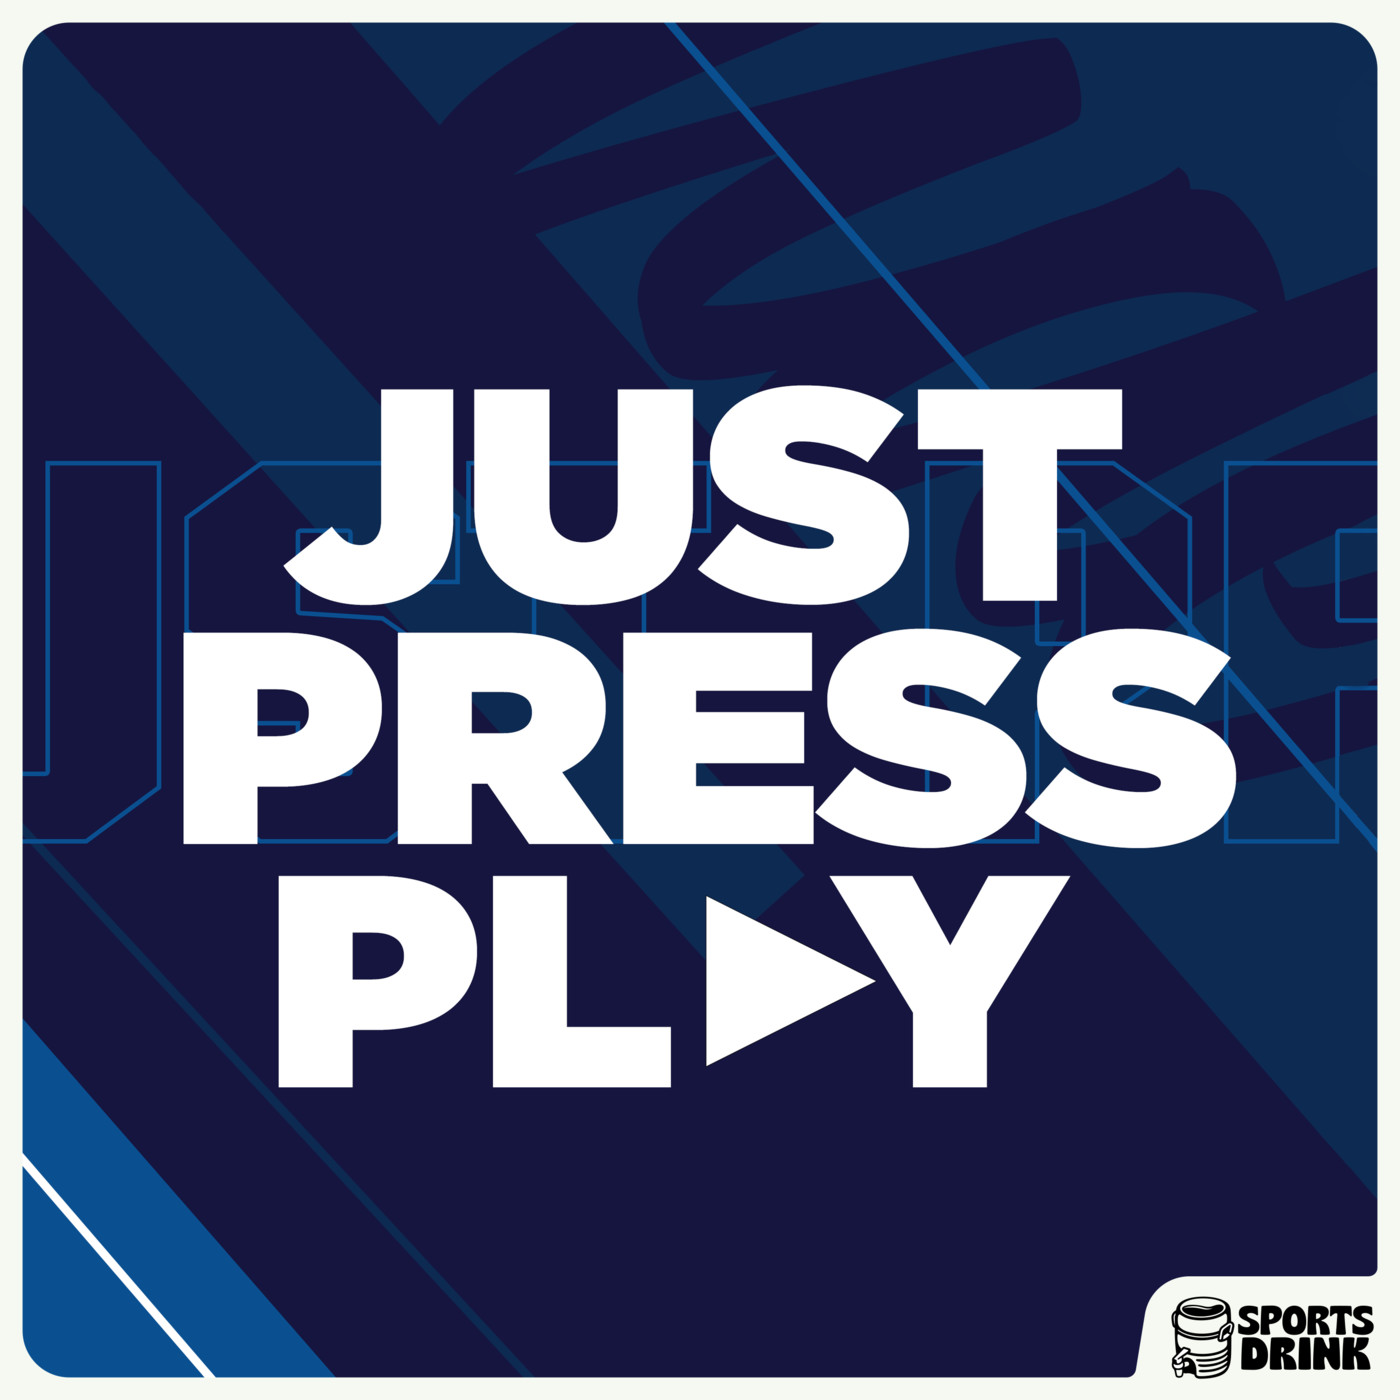 Just press play — RT